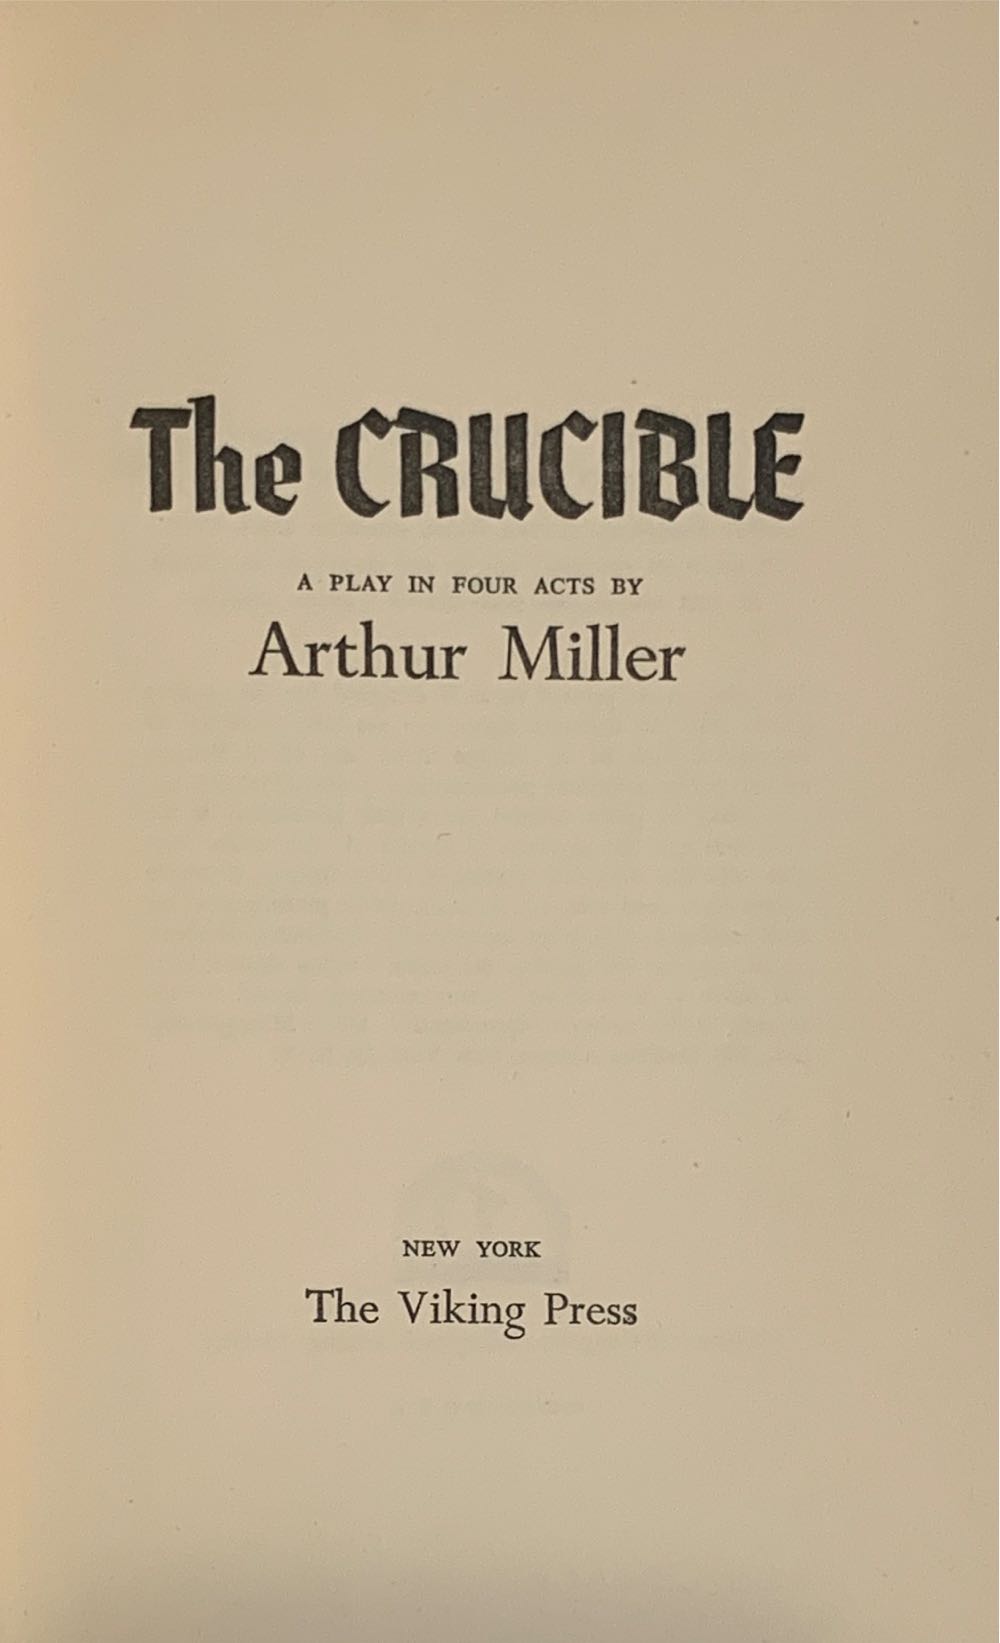 The Crucible - Arthur Miller (Penguin Plays - Hardcover) book collectible - Main Image 3